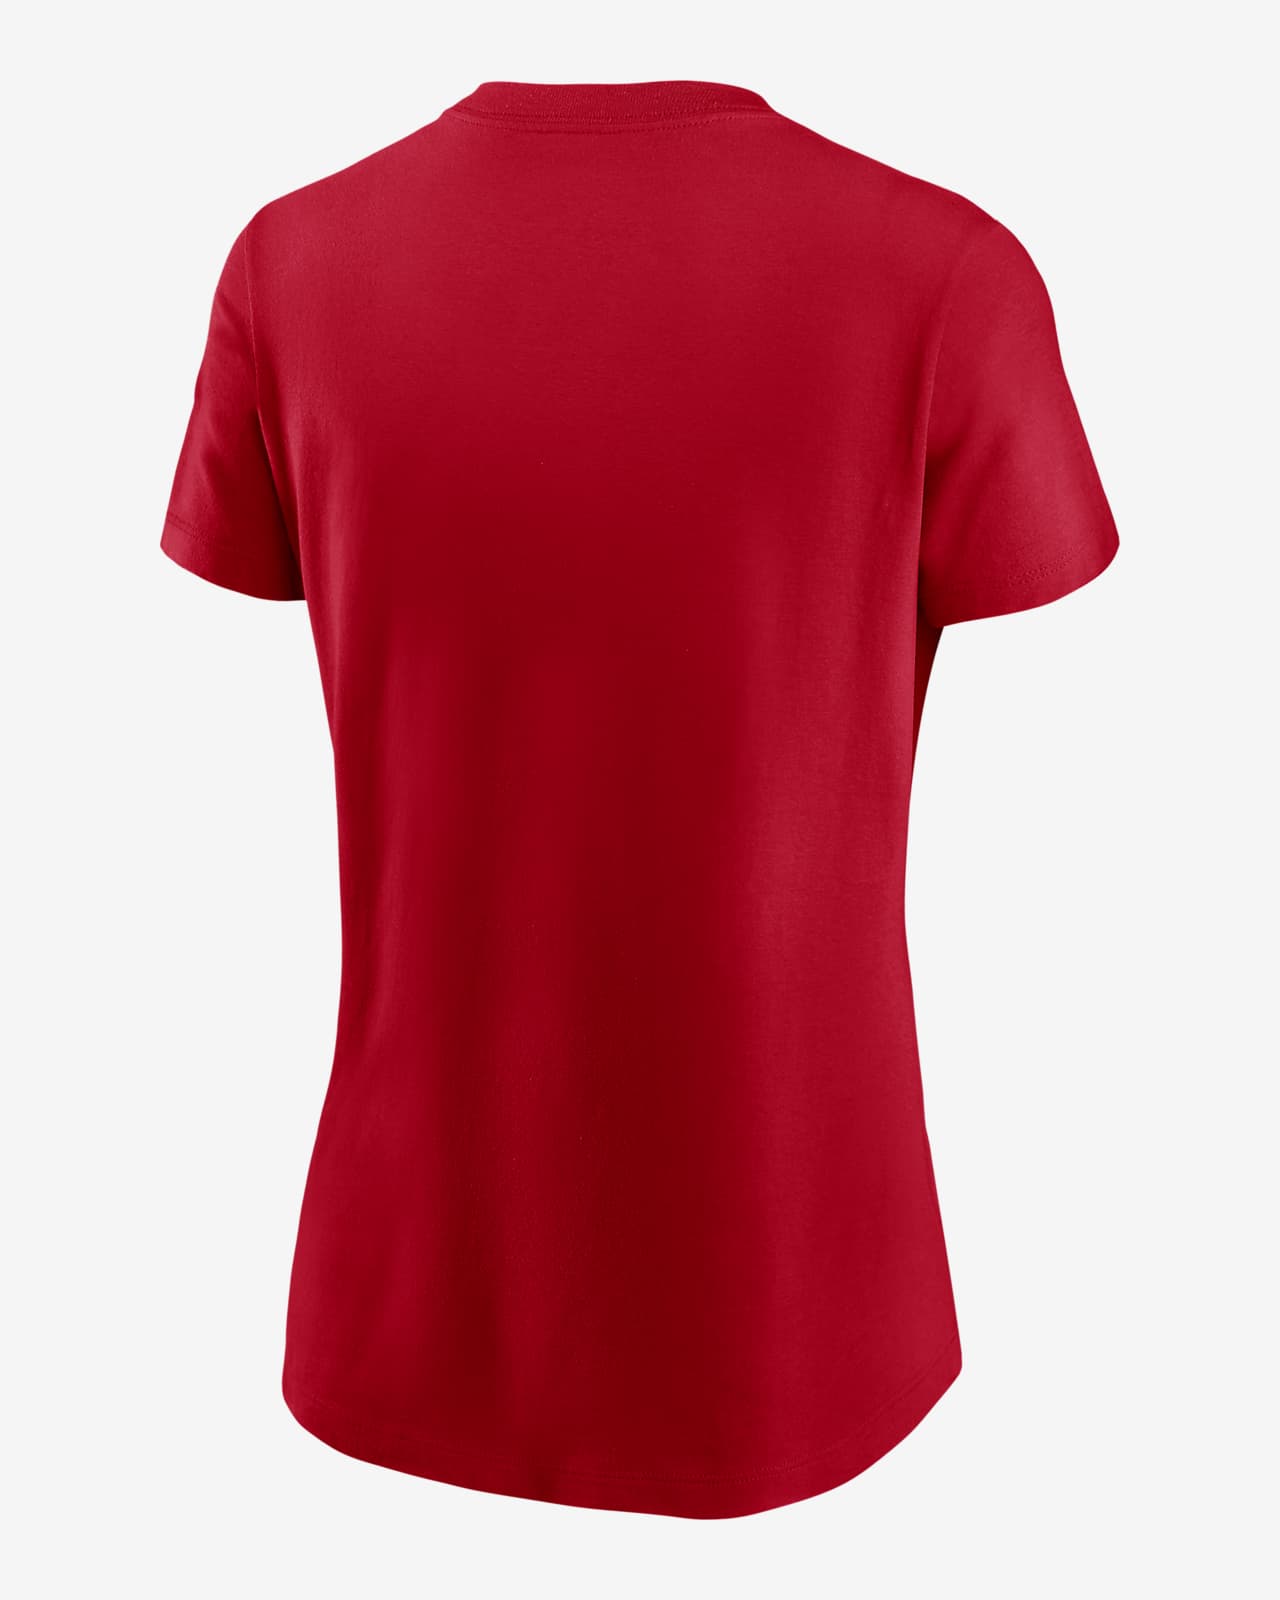 MLB Miami Marlins Women's Short Sleeve V-Neck Fashion T-Shirt - S